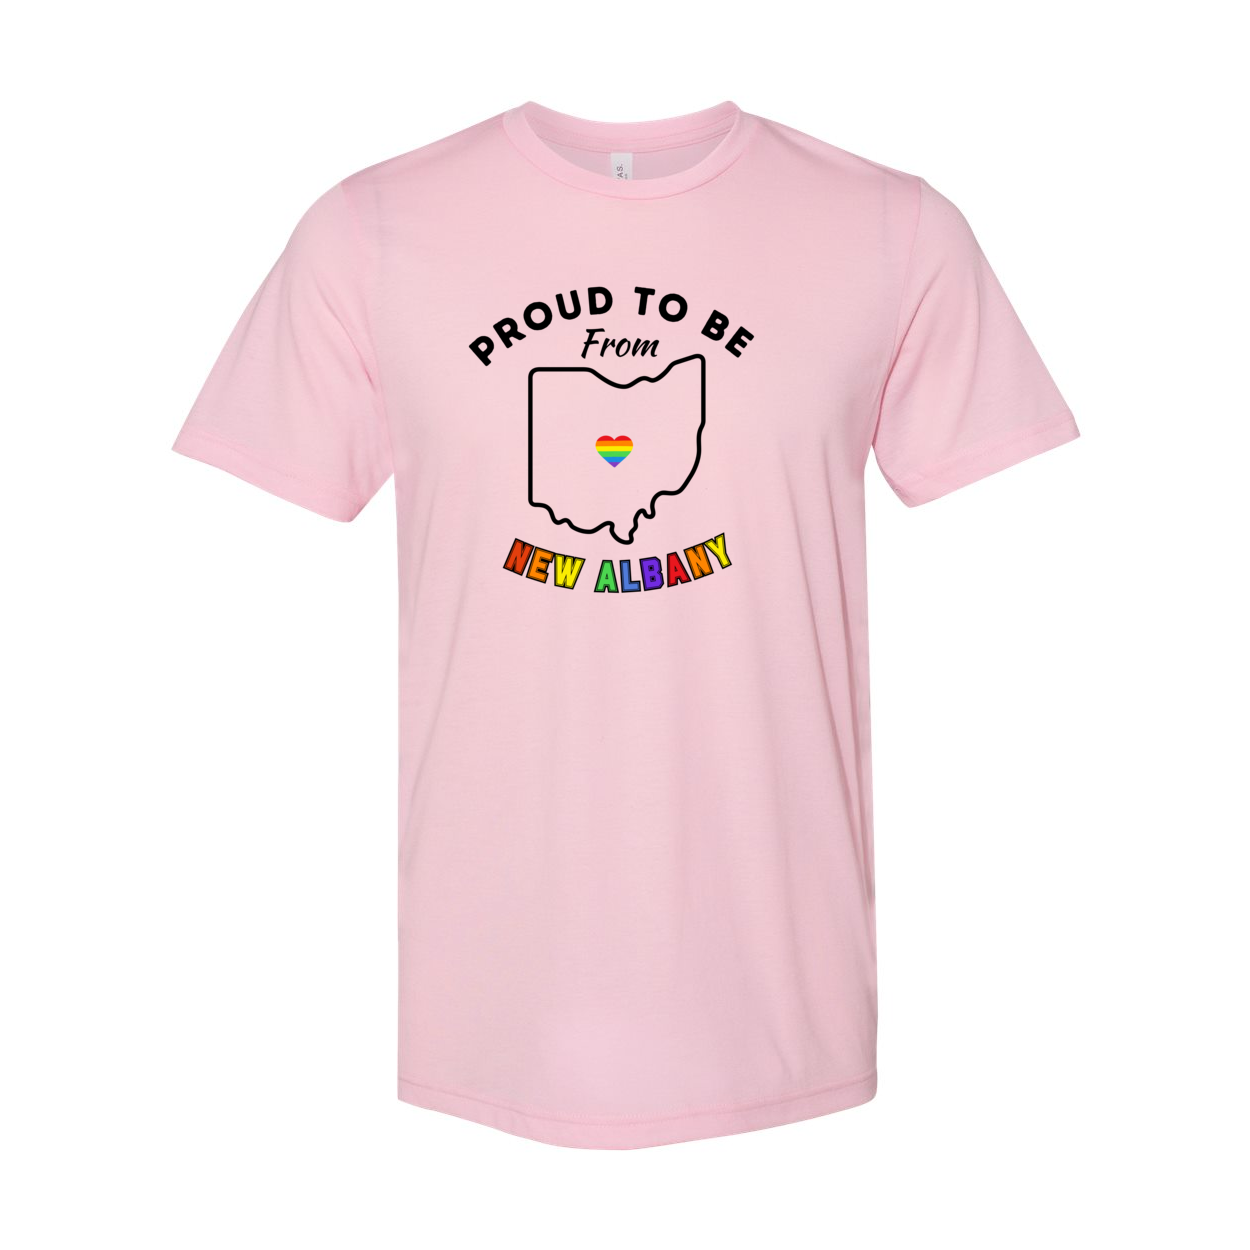 Adult Unisex City Rainbow Pride Super Soft Short Sleeve Graphic Tee - New Albany